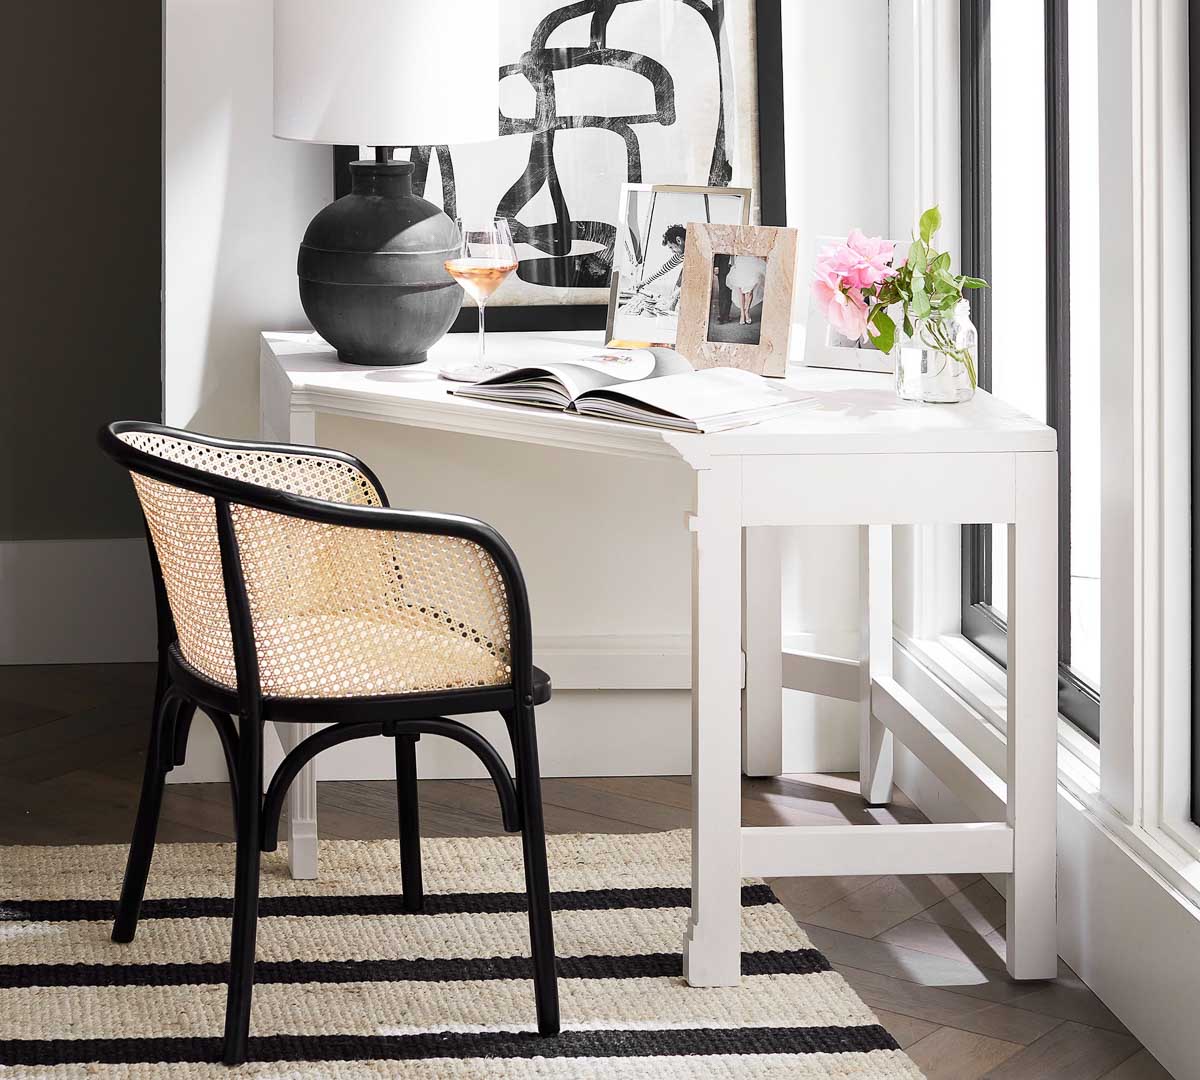 White corner desk with black cane chair - a living room corner idea